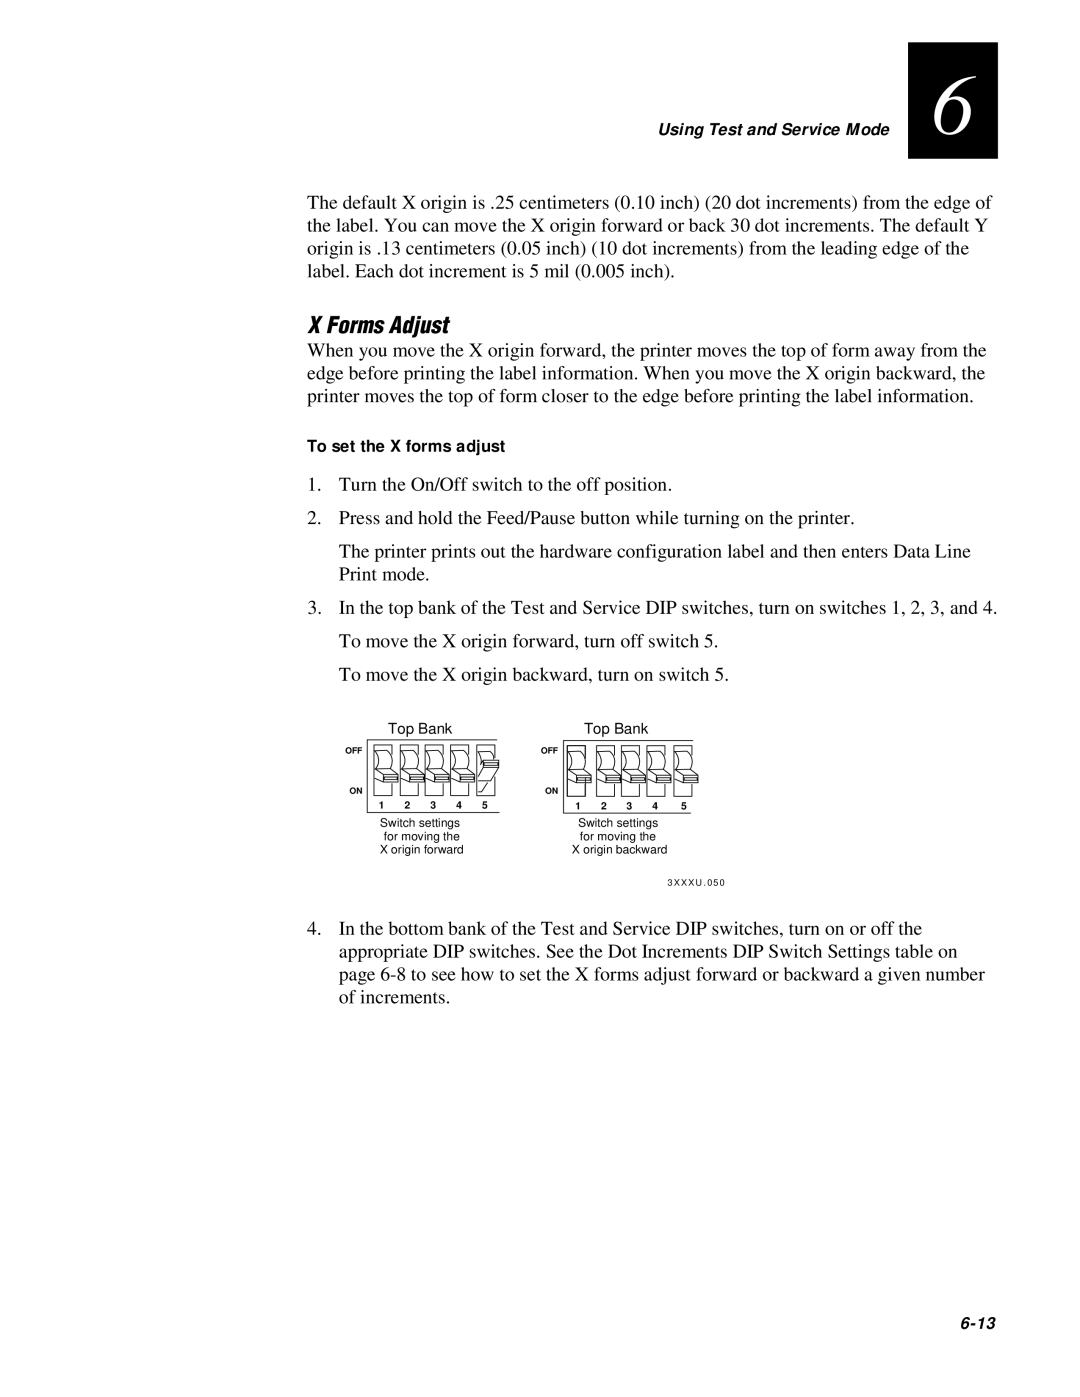 IBM EasyCoder 3400e user manual X Forms Adjust, To set the X forms adjust, 6-13 